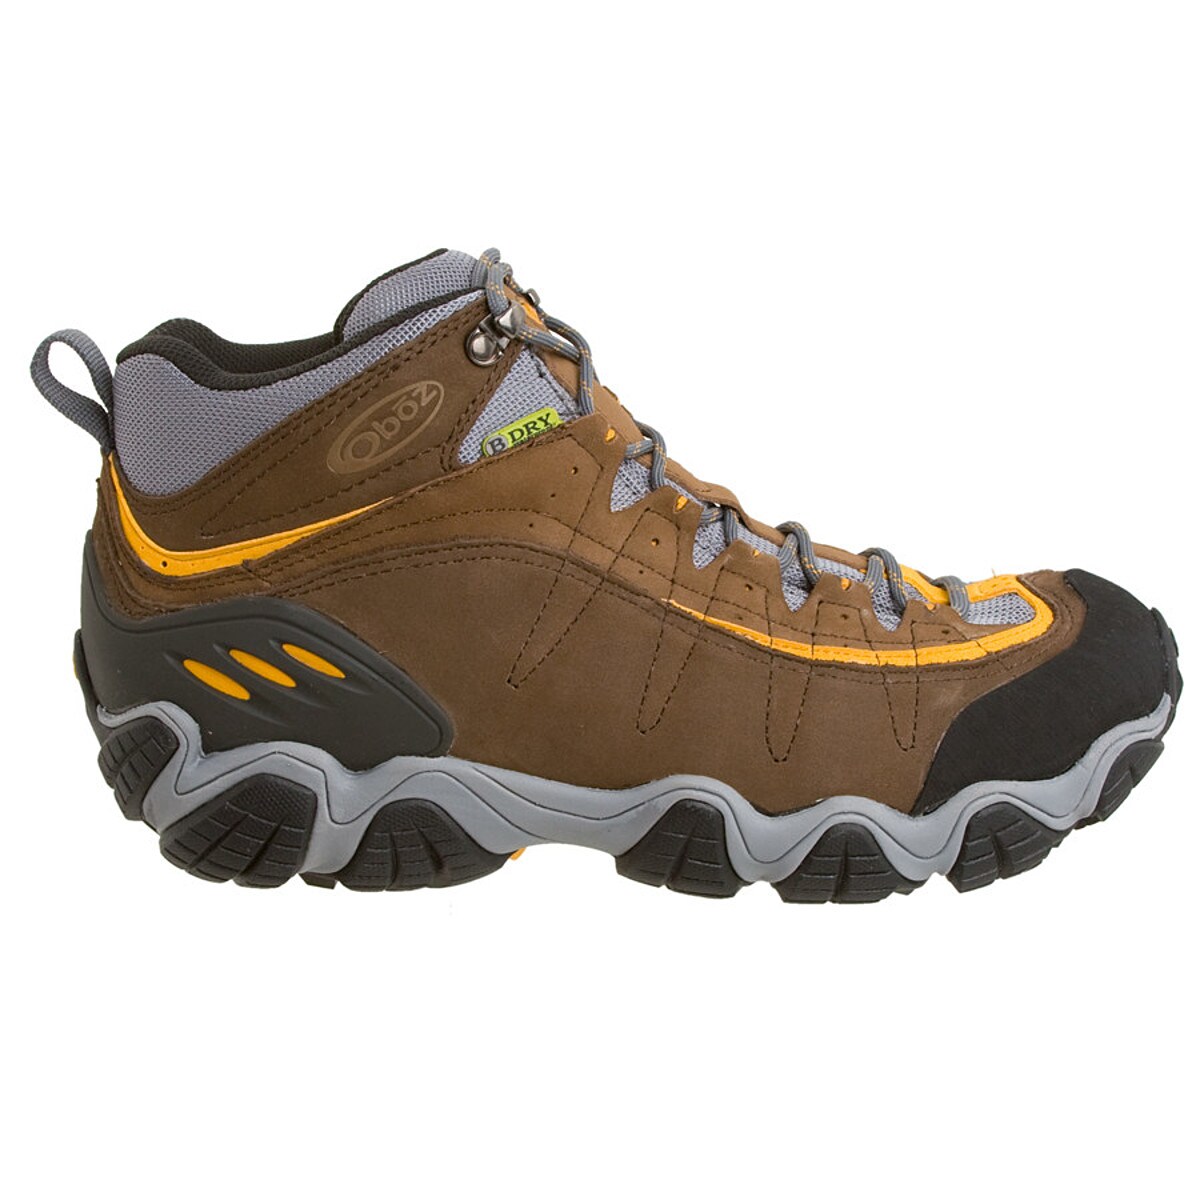 Oboz Yellowstone Waterproof Hiking Shoe - Men's - Footwear